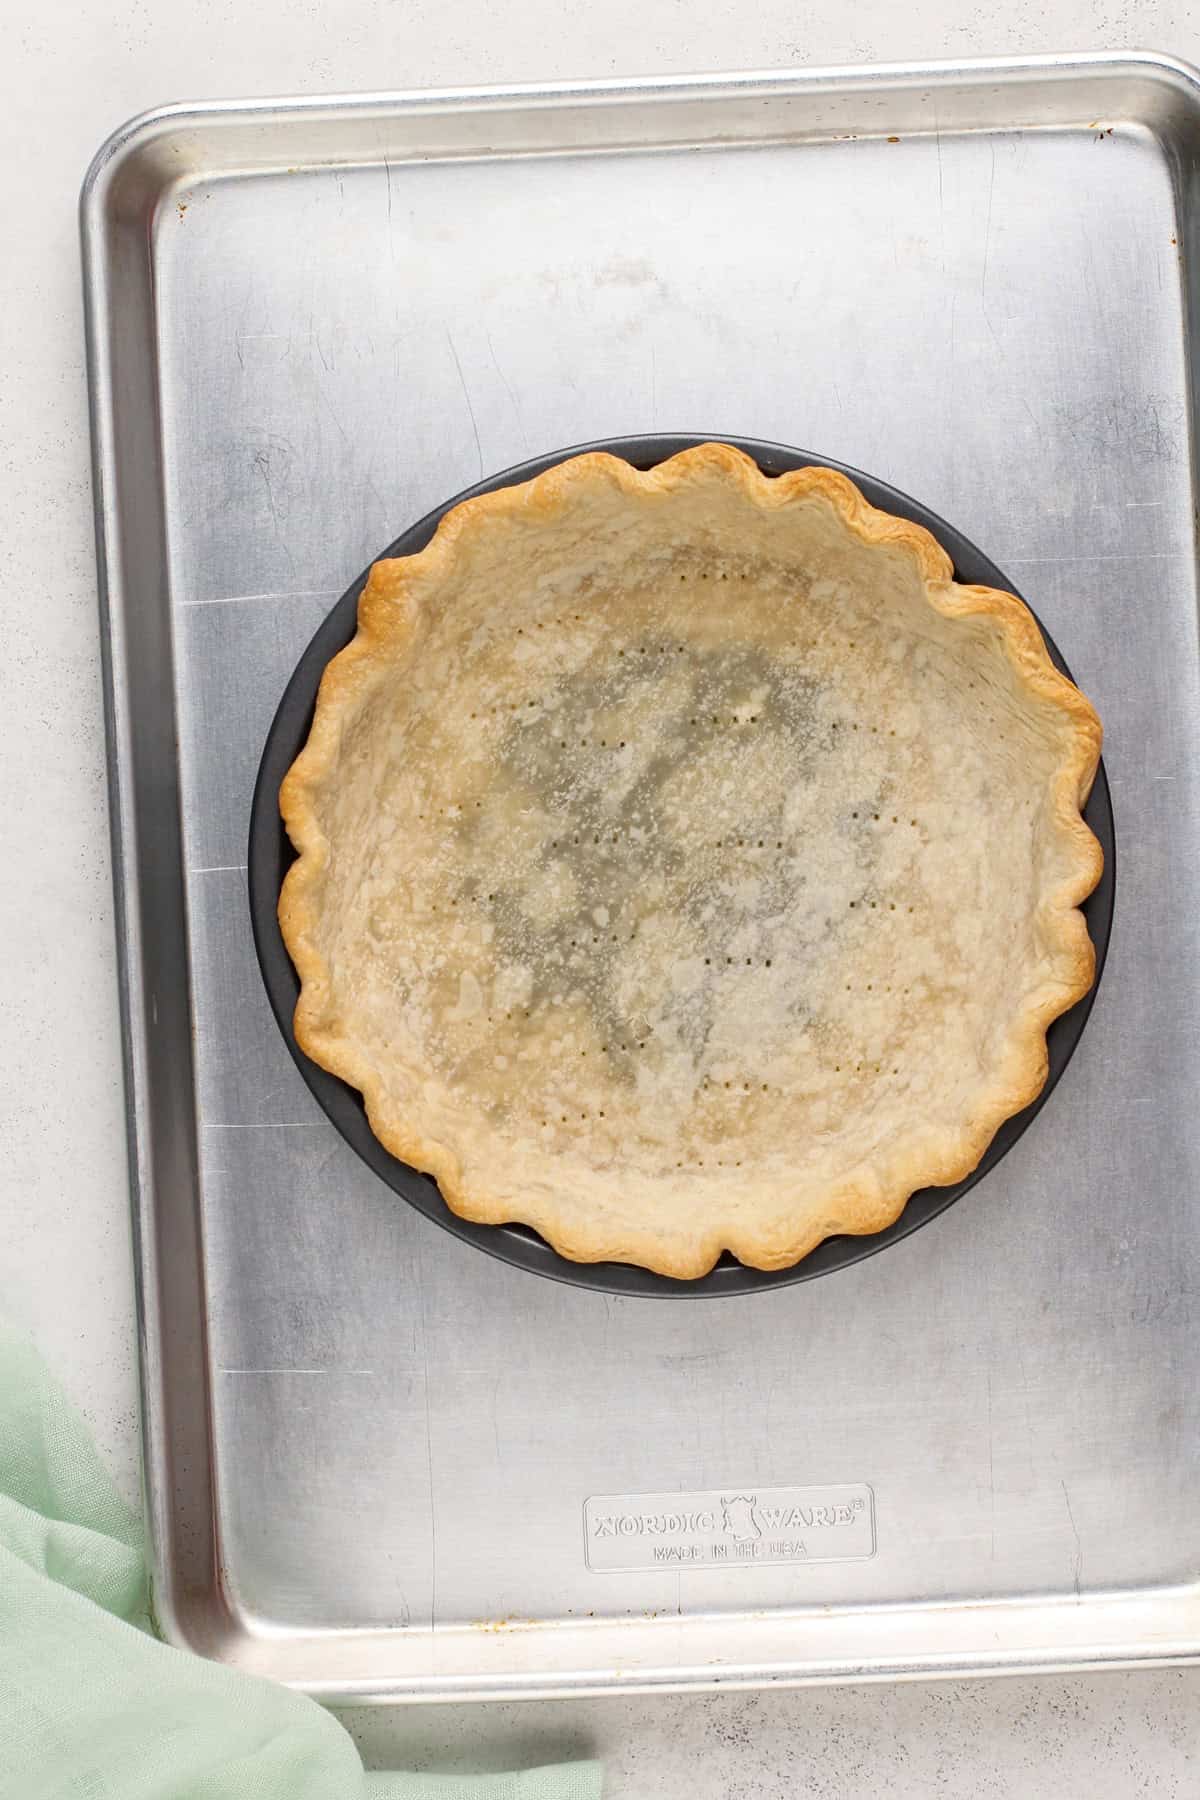 Blind baked pie crust set on a rimmed baking sheet.